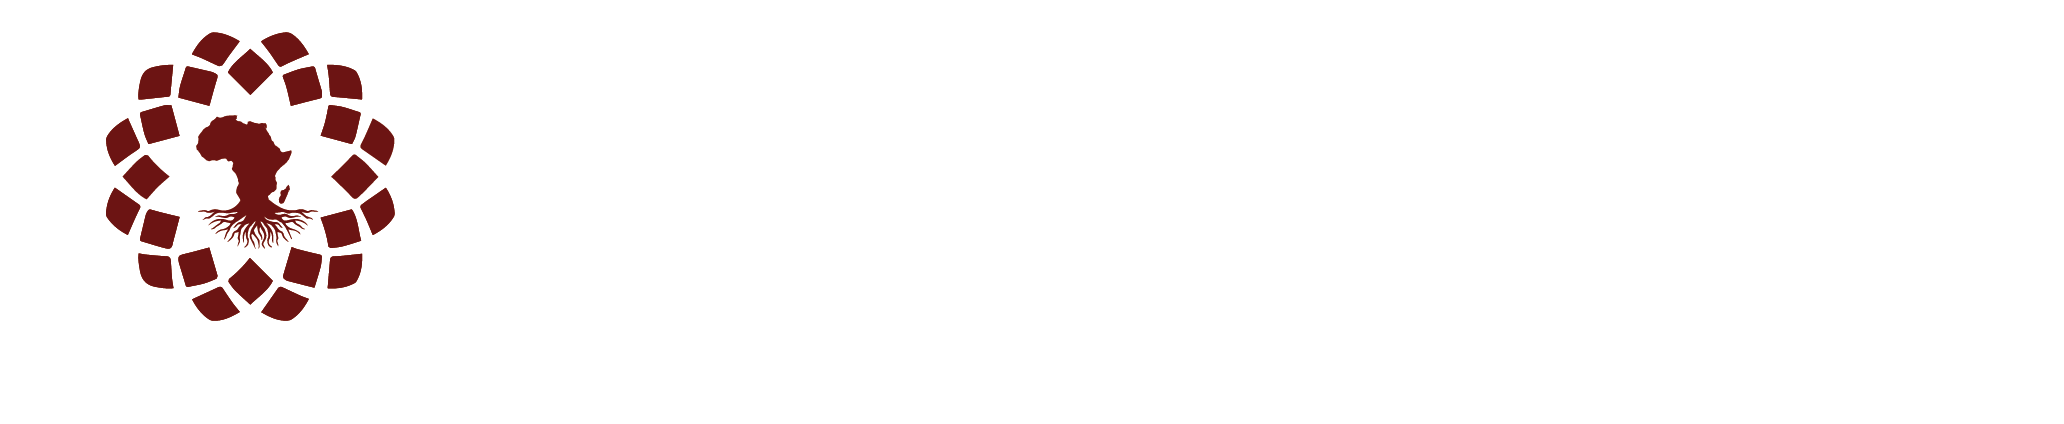 Fayda Institute - white logo